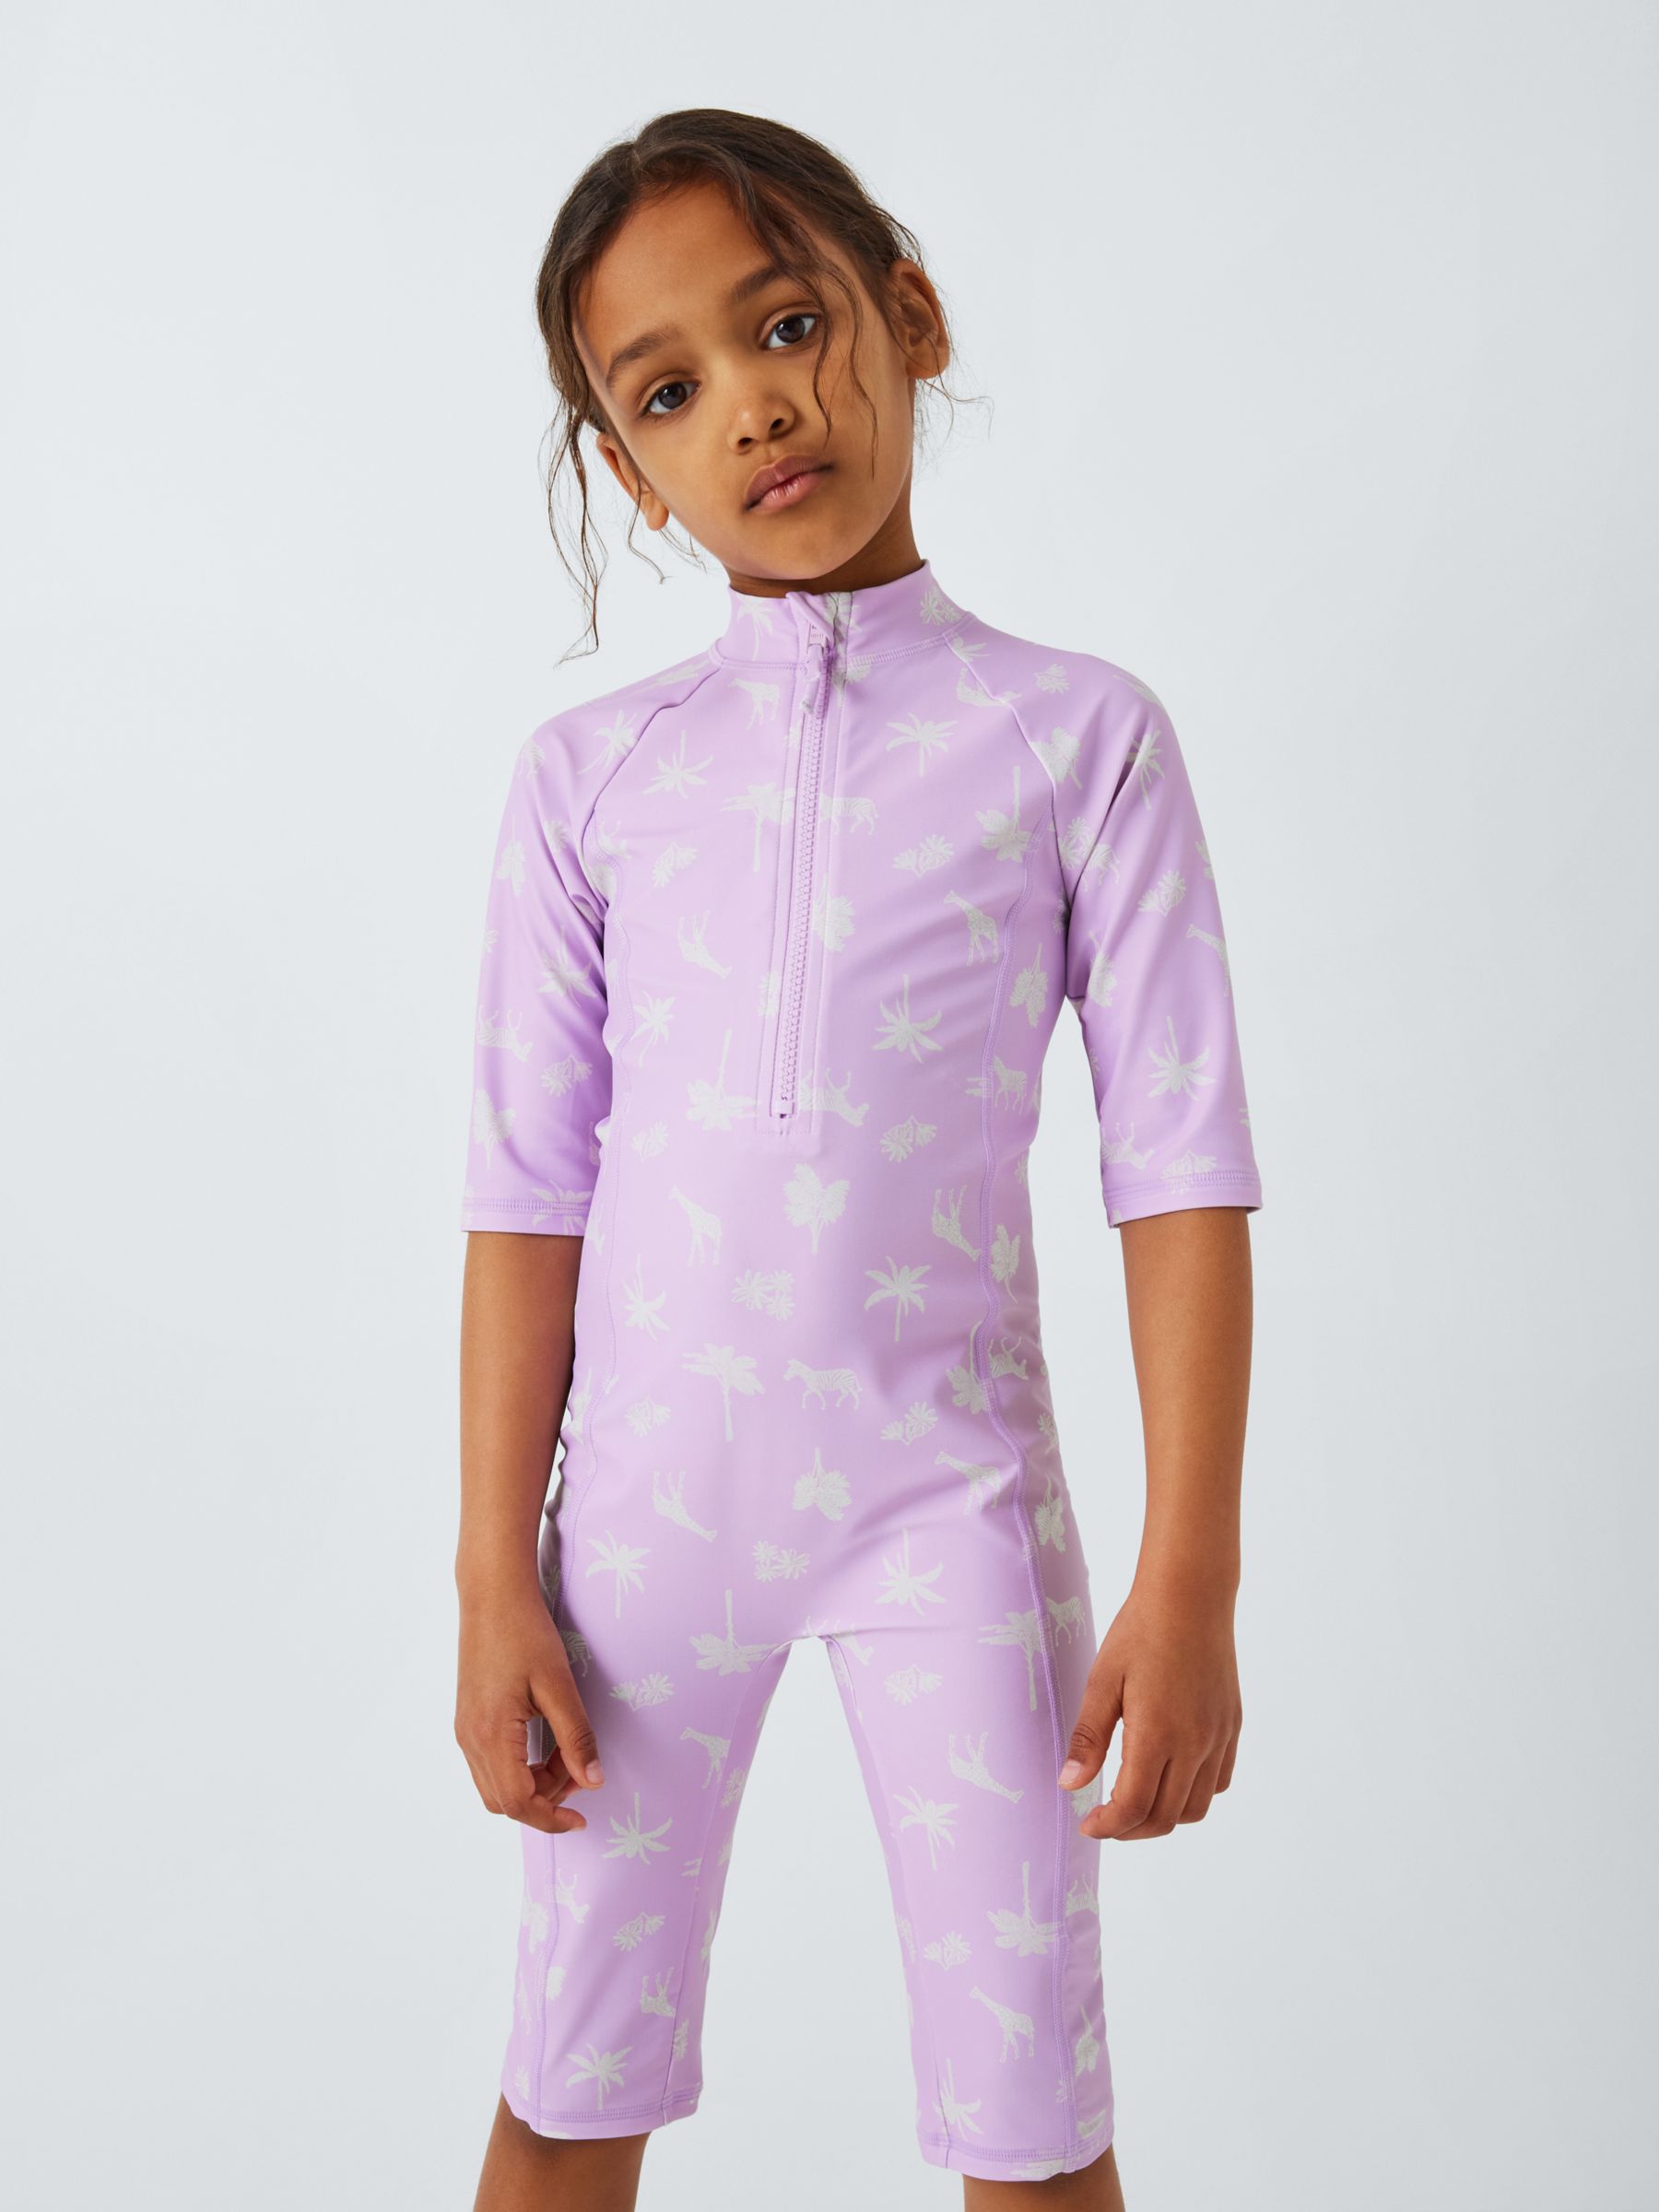 John Lewis Kids' Safari Print Sunpro Swimsuit, Lilac, 10 years